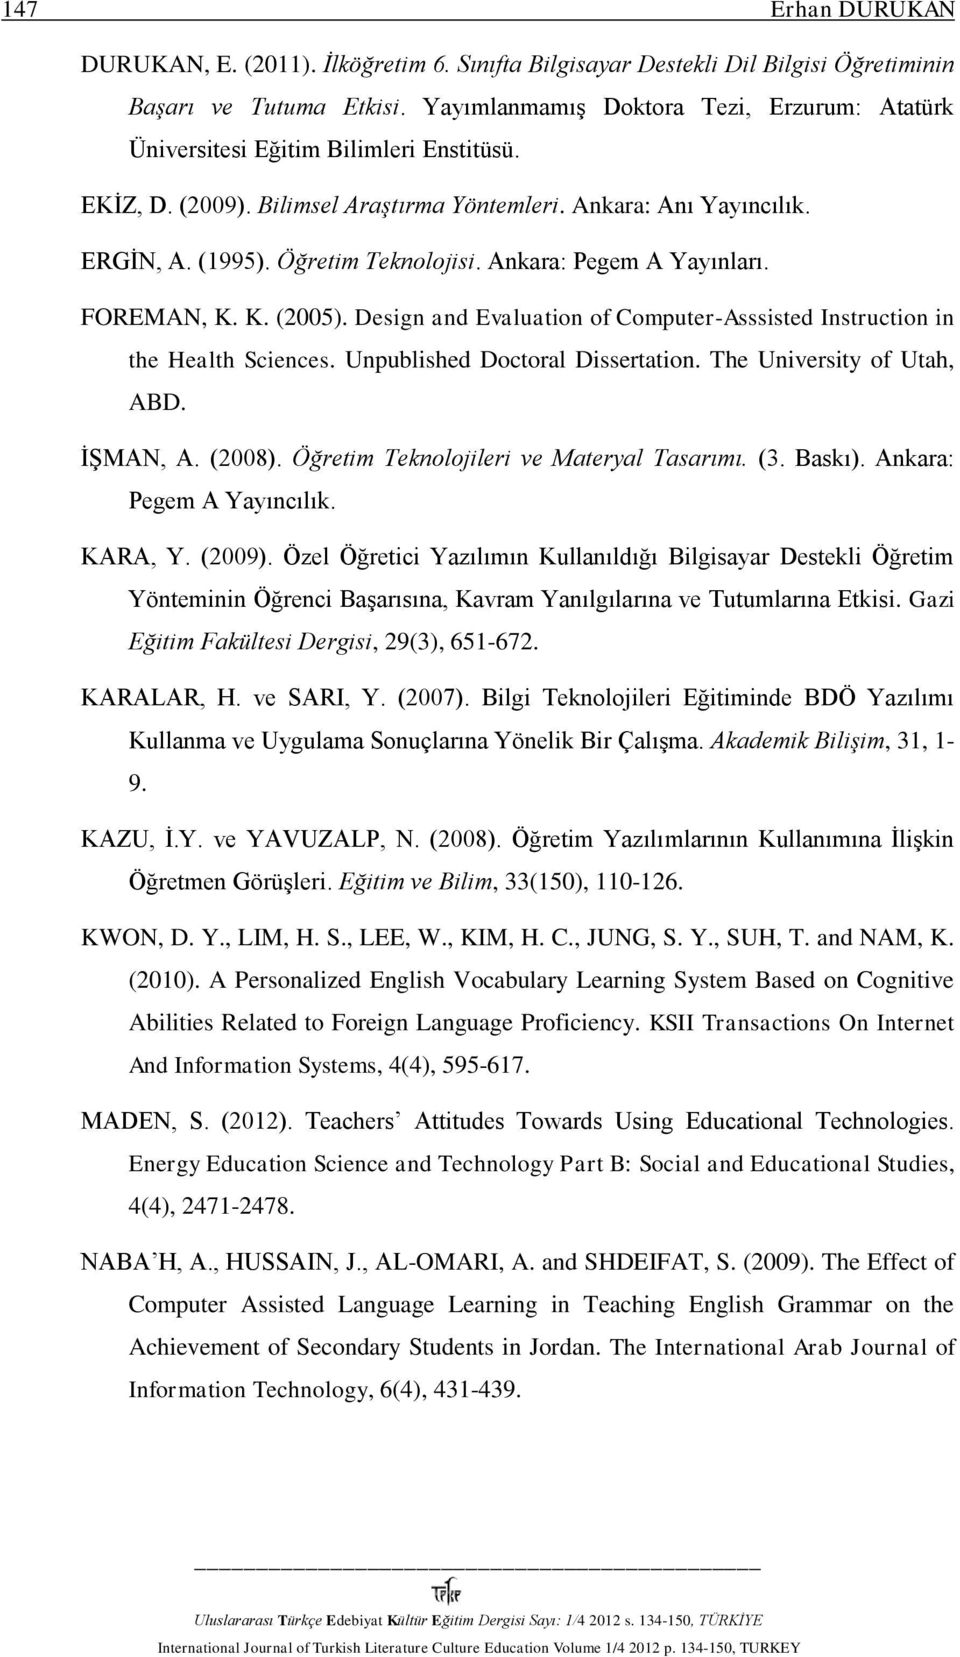 Ankara: Pegem A Yayınları. FOREMAN, K. K. (2005). Design and Evaluation of Computer-Asssisted Instruction in the Health Sciences. Unpublished Doctoral Dissertation. The University of Utah, ABD.